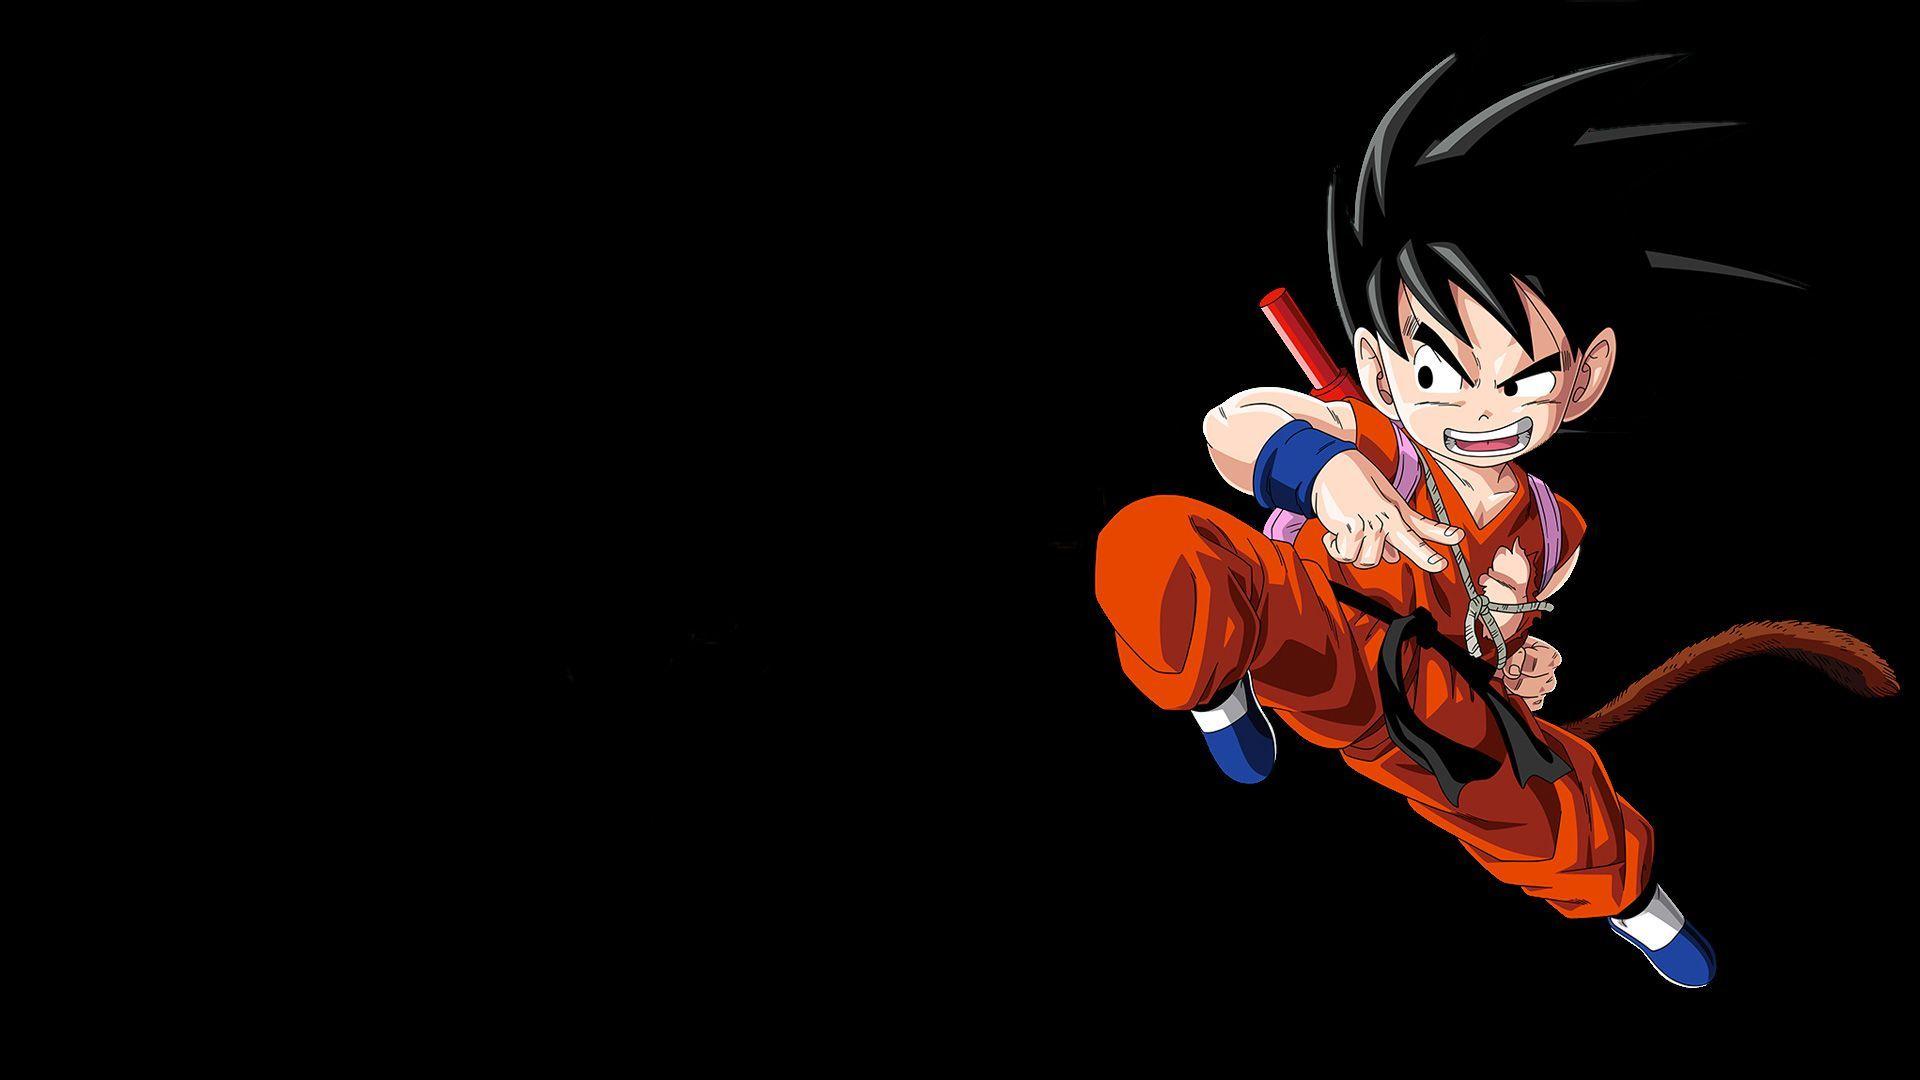 Best Goku Wallpaper HD for PC: Dragon Ball Z. Dragon ball